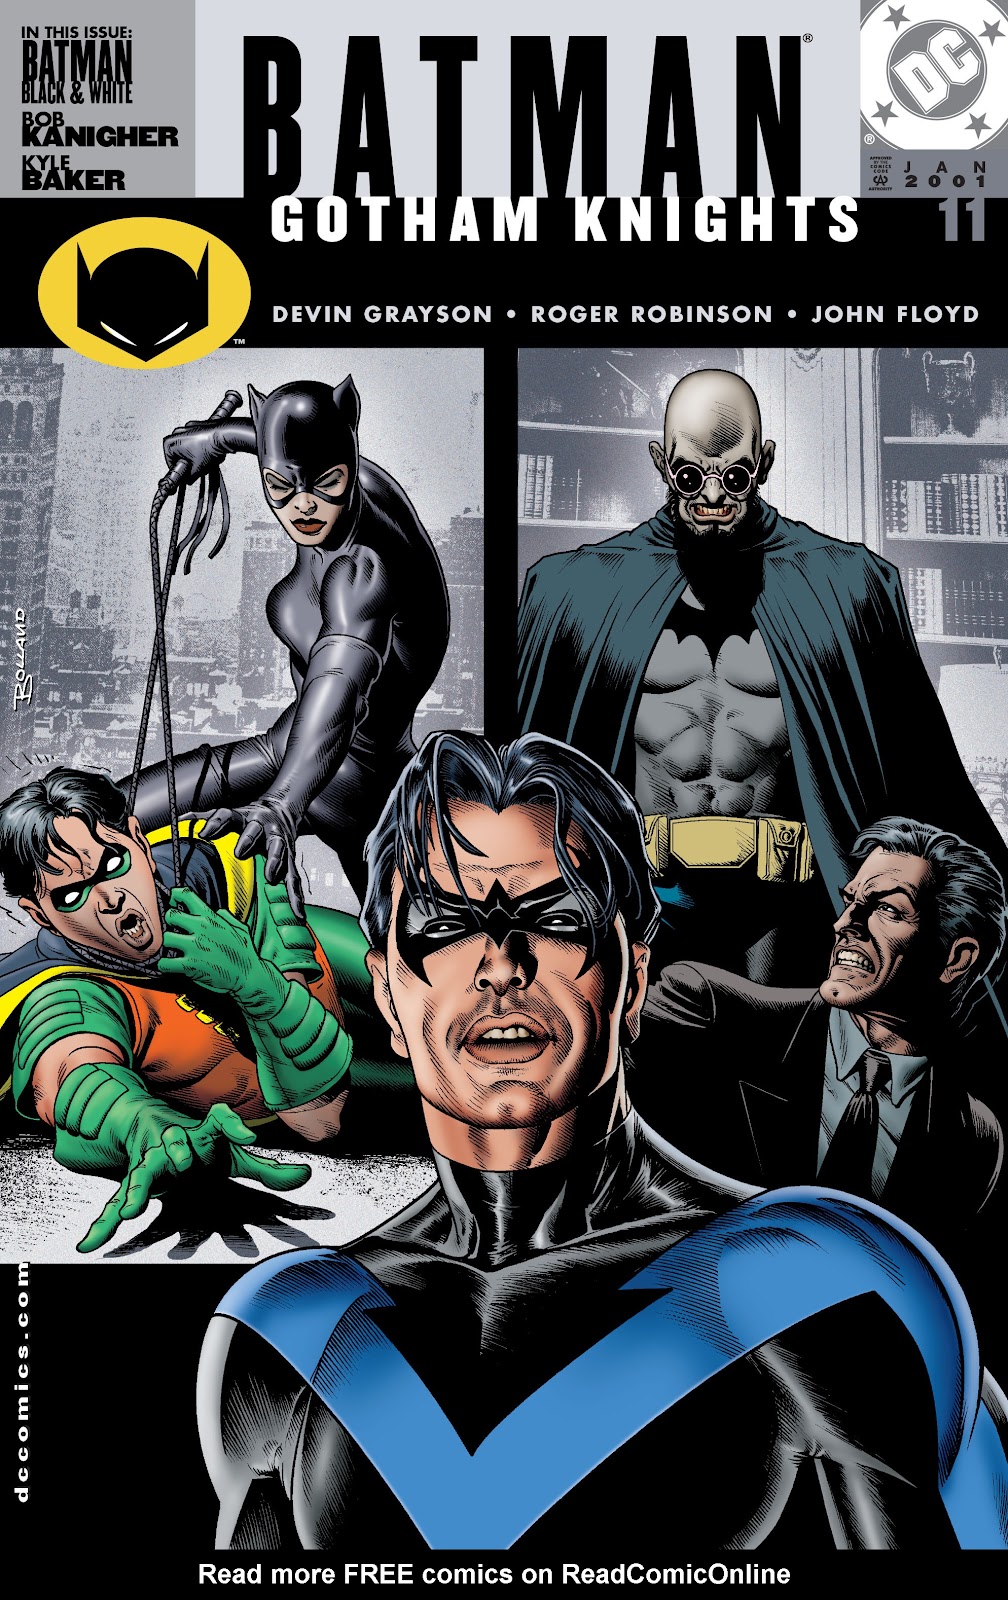 Batman Gotham Knights 011 | Read Batman Gotham Knights 011 comic online in  high quality. Read Full Comic online for free - Read comics online in high  quality .|